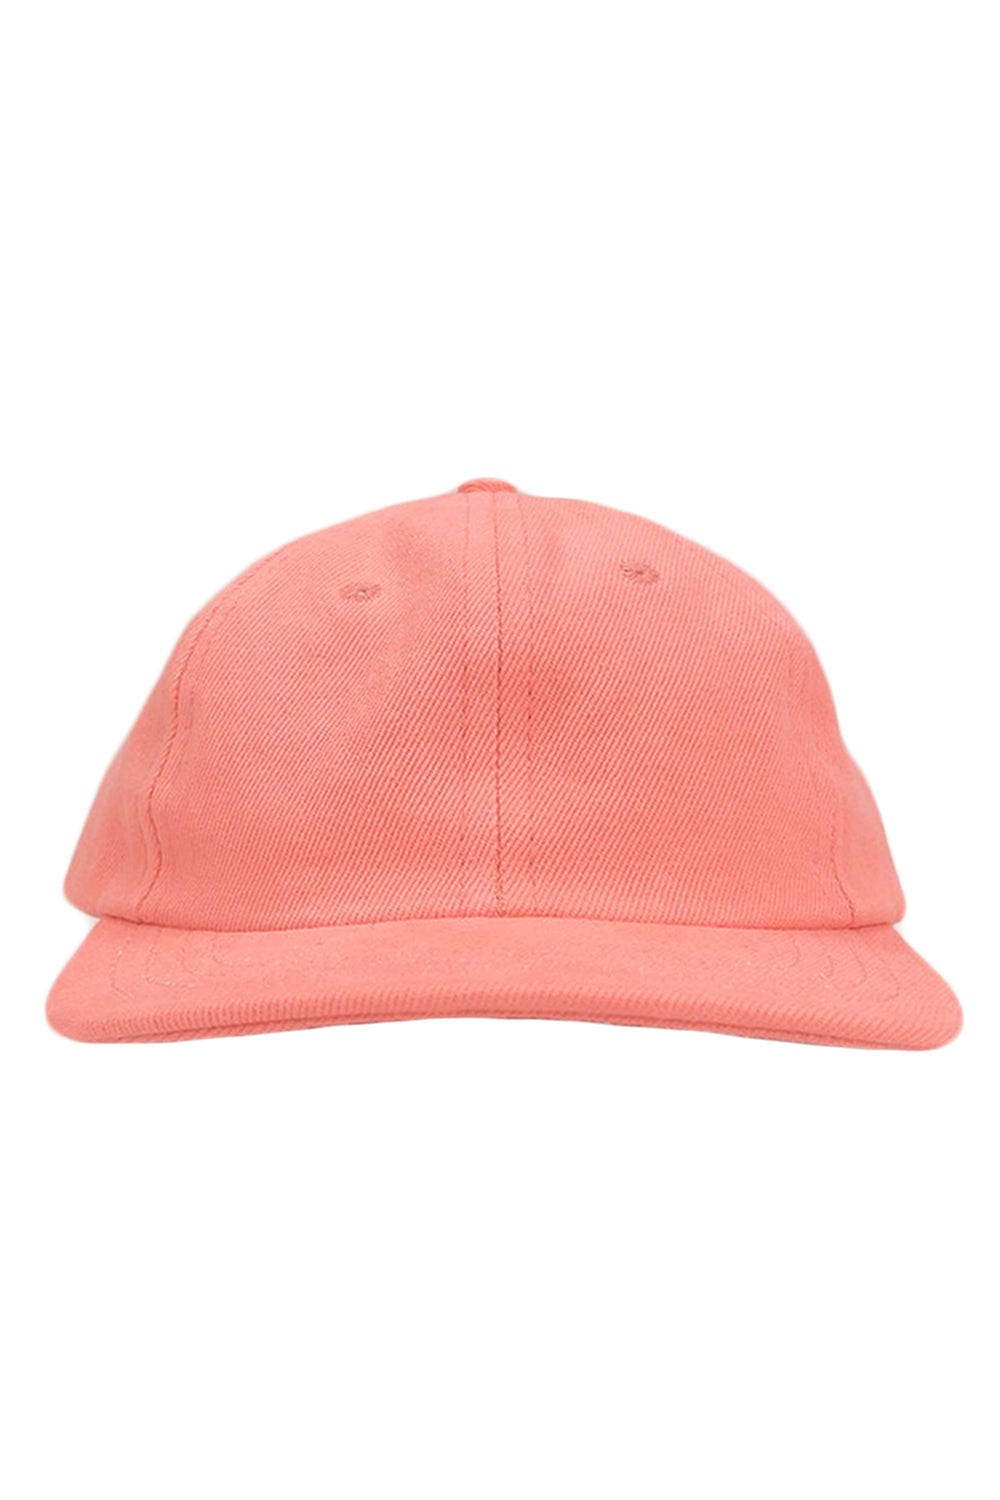 Chenga Twill Cap | Jungmaven Hemp Clothing & Accessories / Color: Pink Salmon